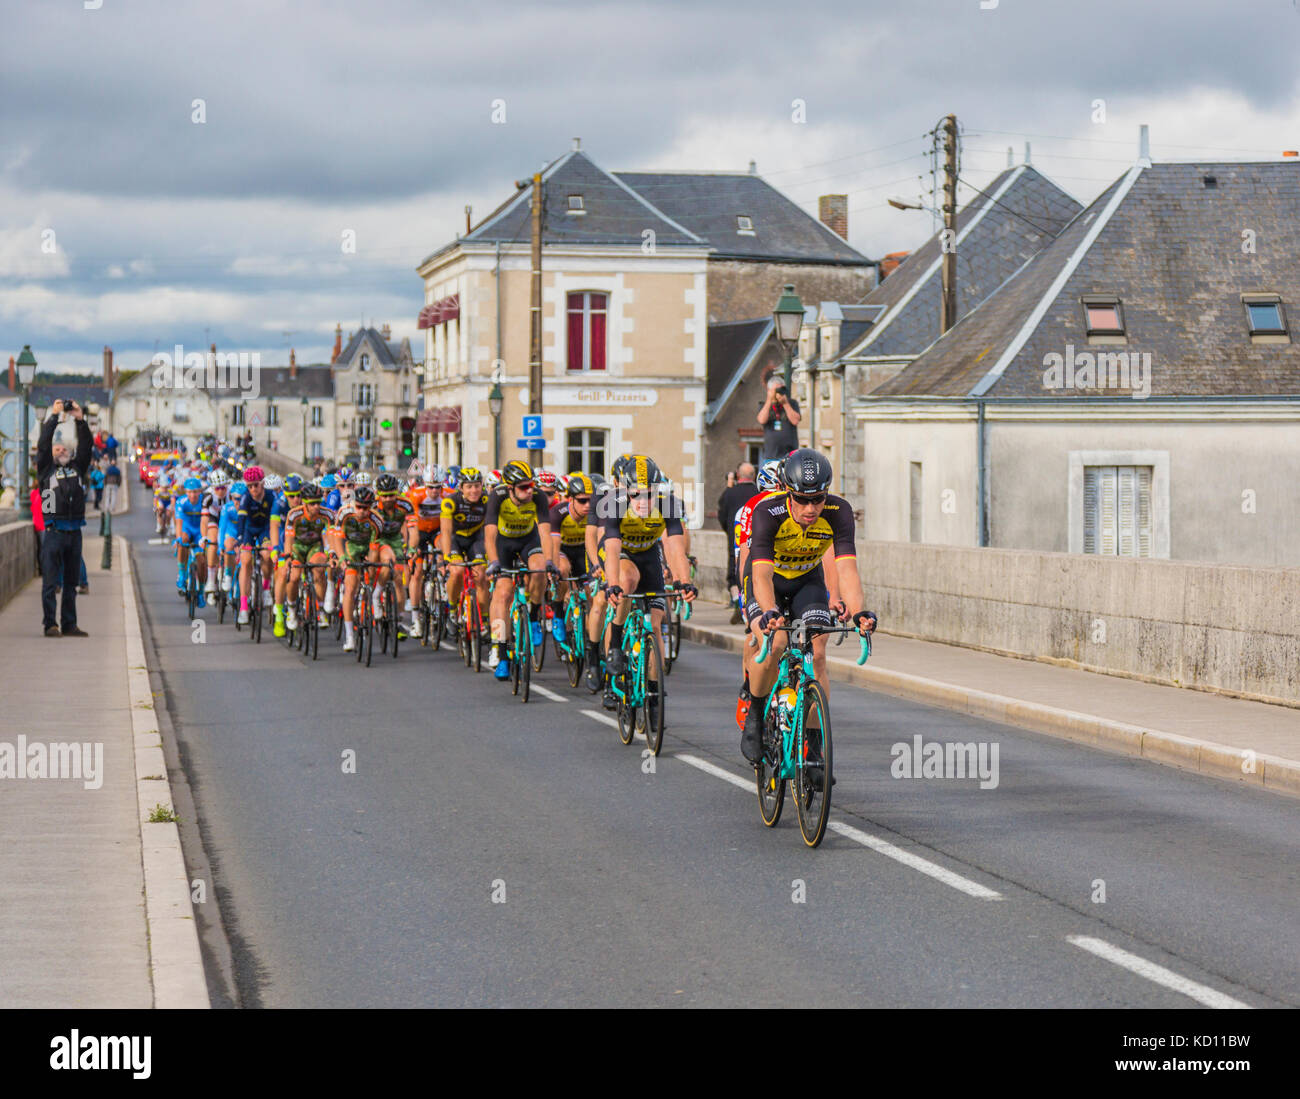 Amboise, France. 8th Oct, 2017. The peloton passing on the bridge in Amboise during the Paris-Tours road cycling race. Credit: Radu Razvan/Alamy Live News Stock Photo